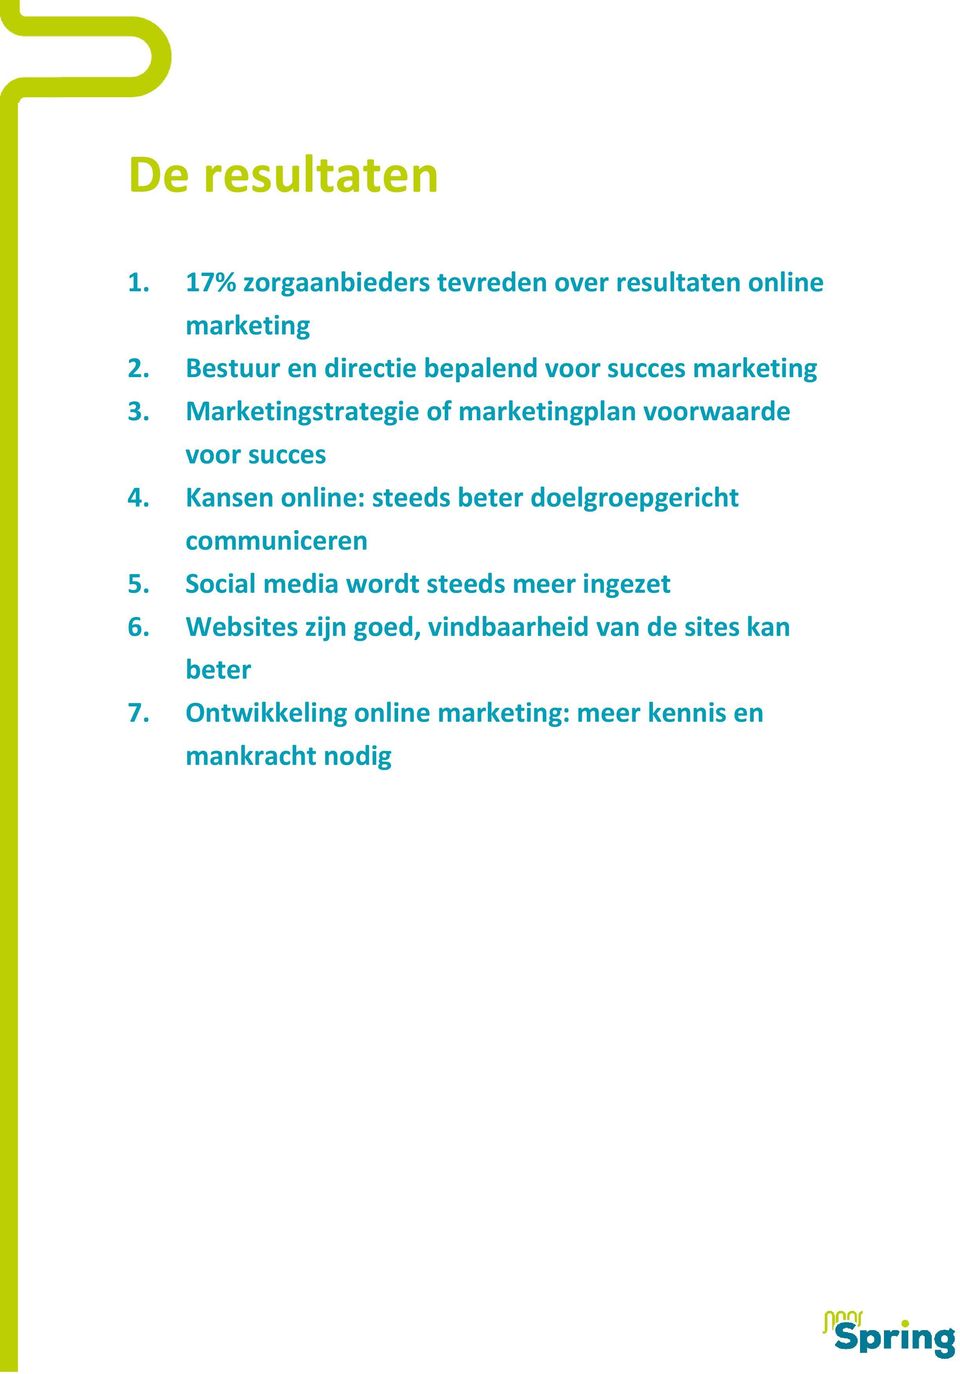 Marketingstrategie of marketingplan voorwaarde voor succes 4.